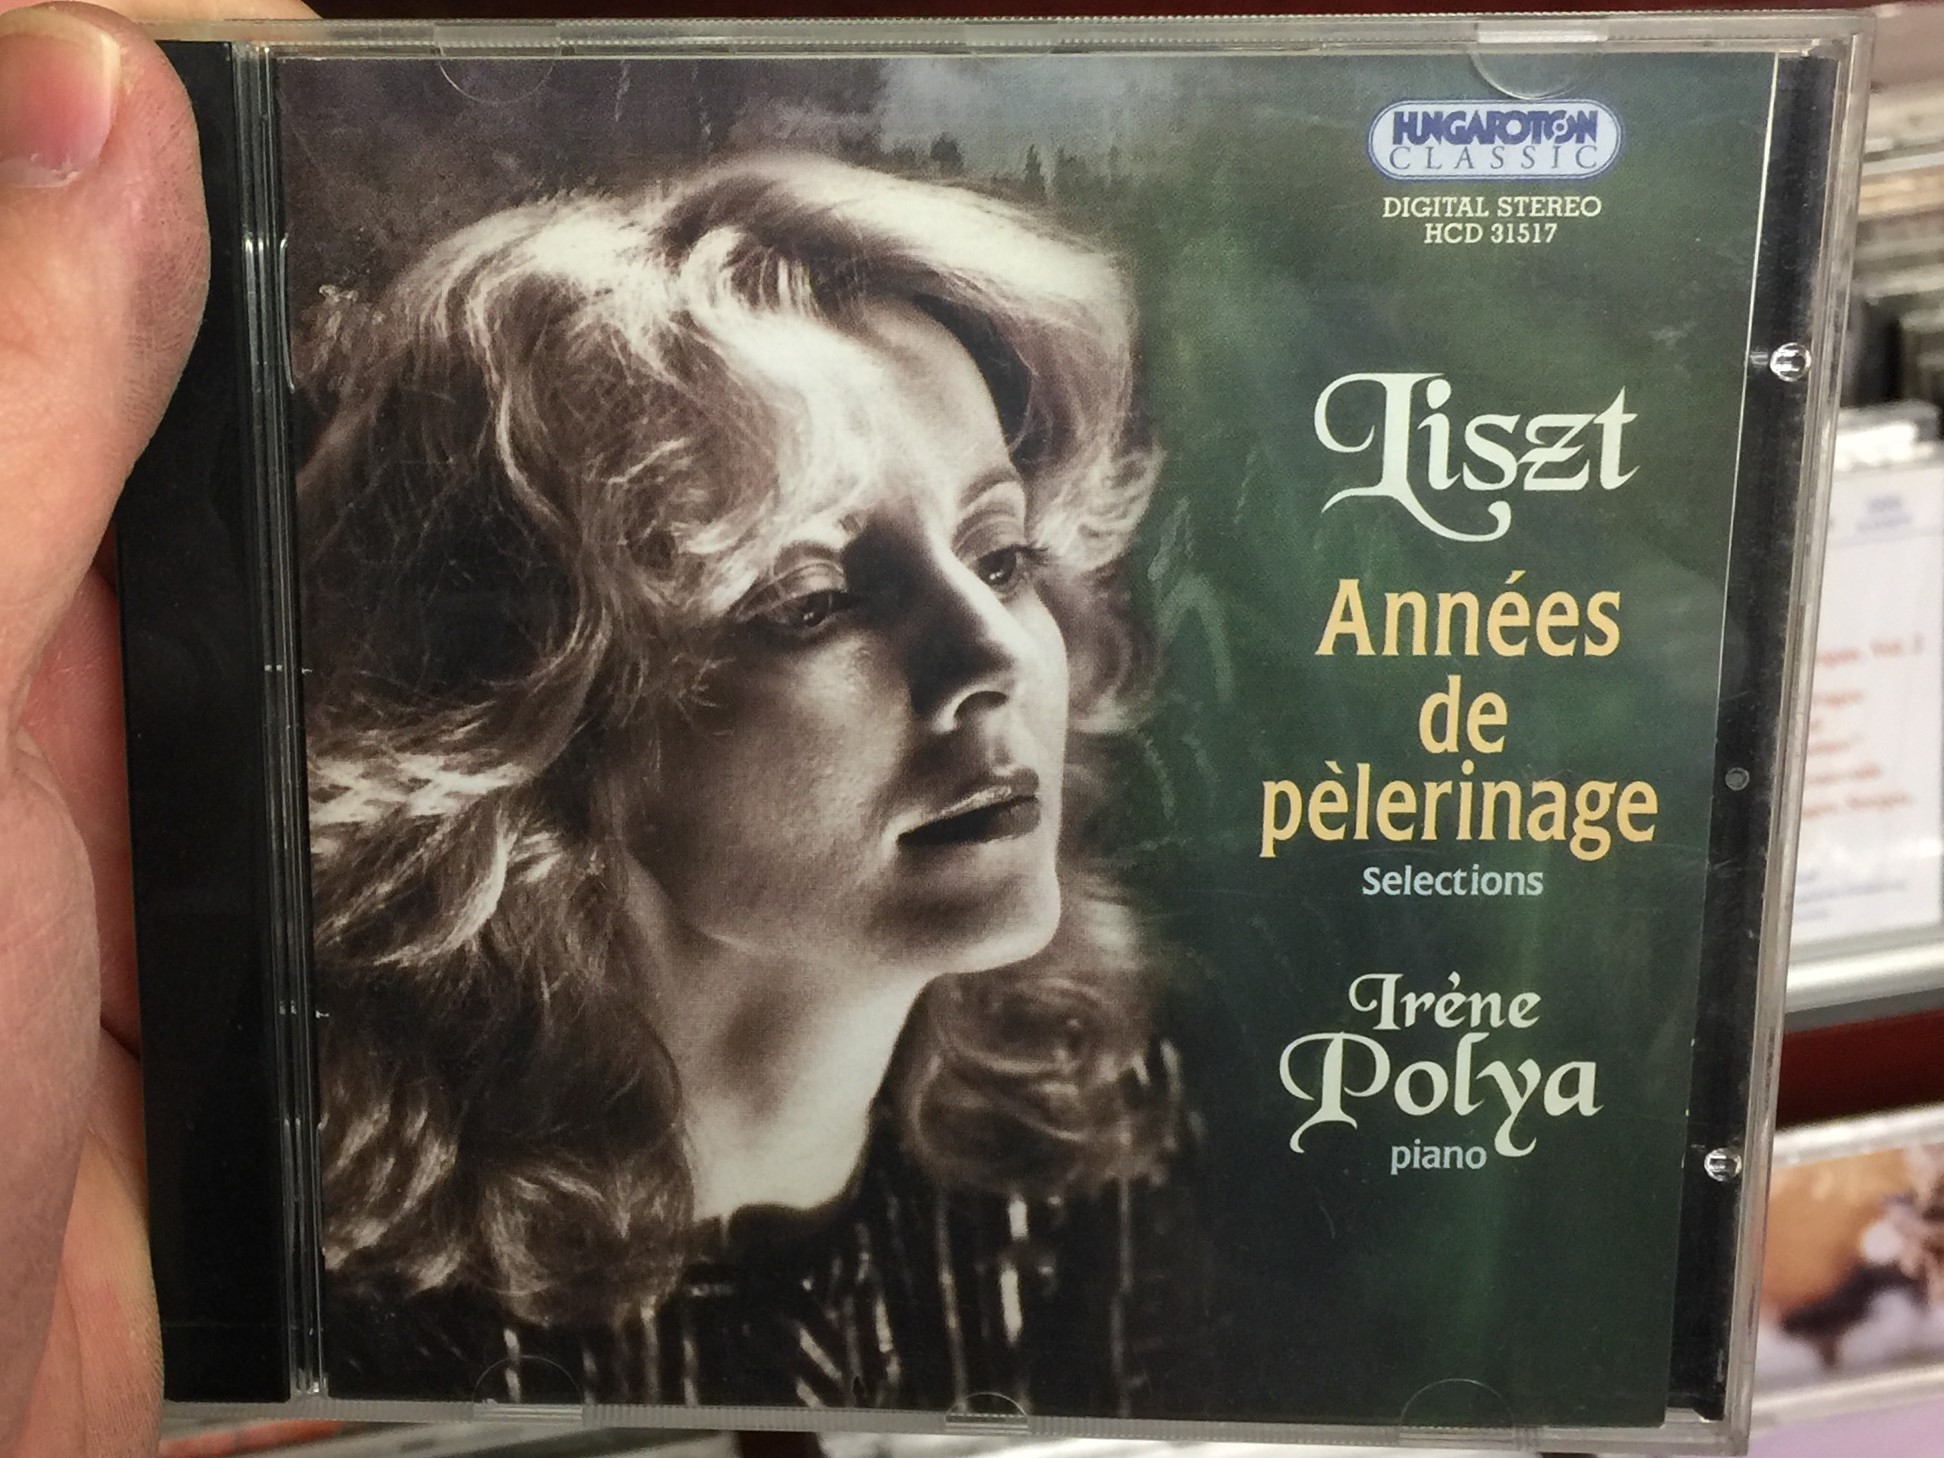 liszt-annees-de-pelerinage-selections-irene-polya-paino-hungaroton-classic-audio-cd-2004-stereo-hcd-31517-1-.jpg